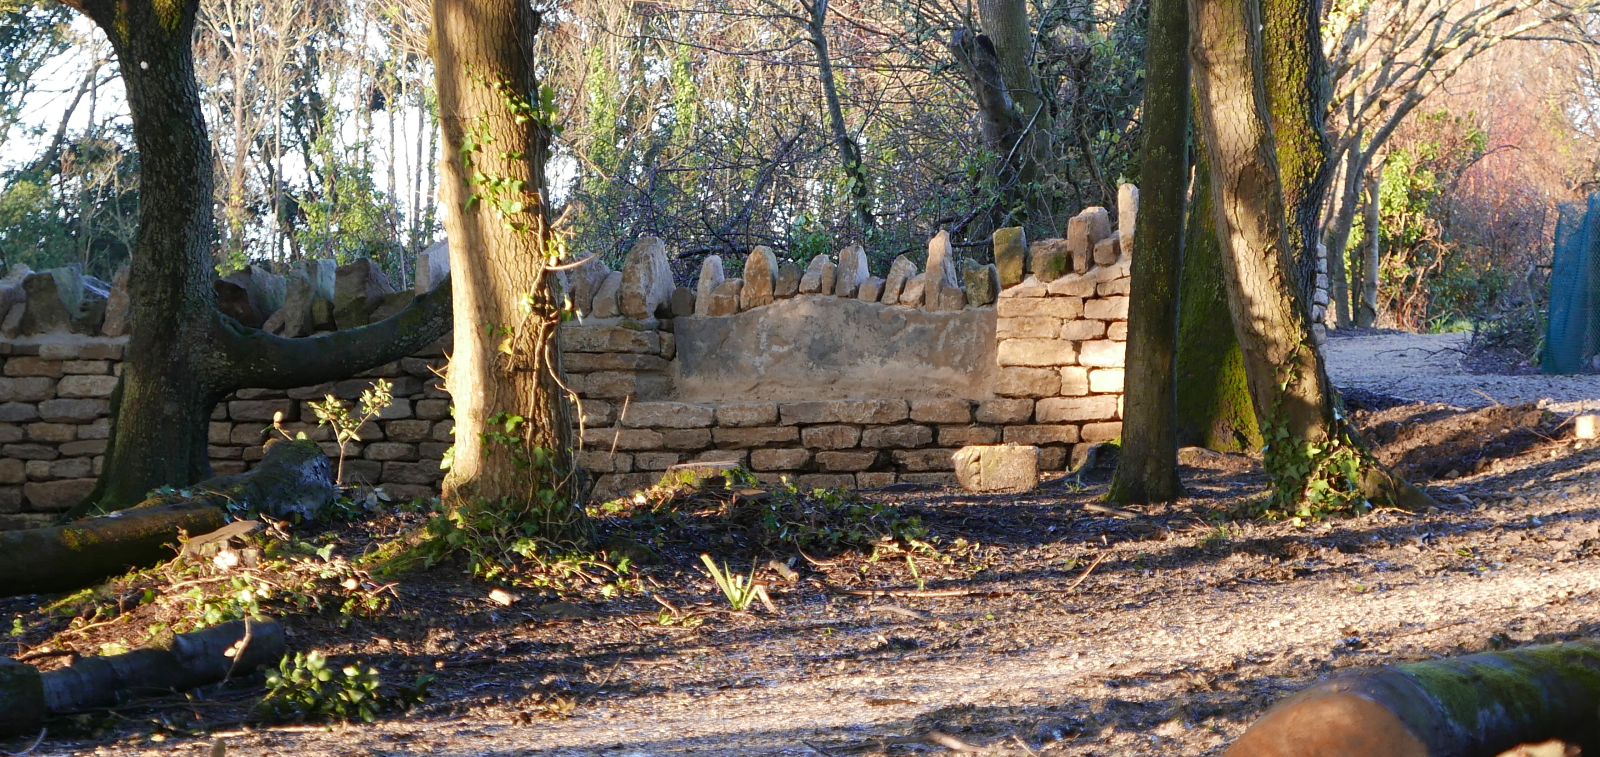 Dry-stone Walling